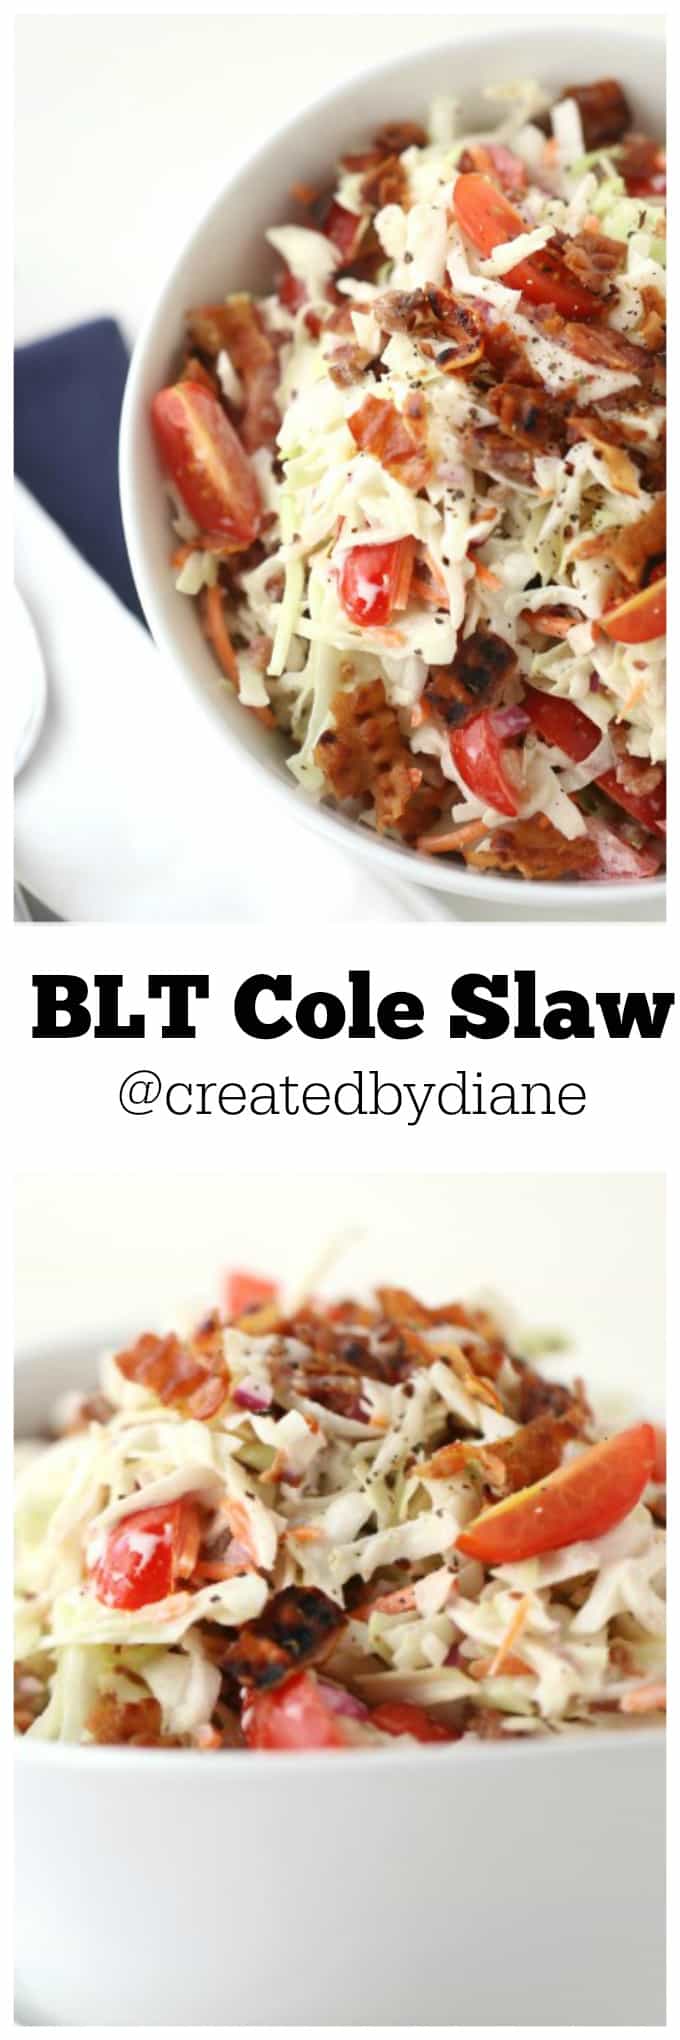 BLT Cole Slaw @createdbydiane